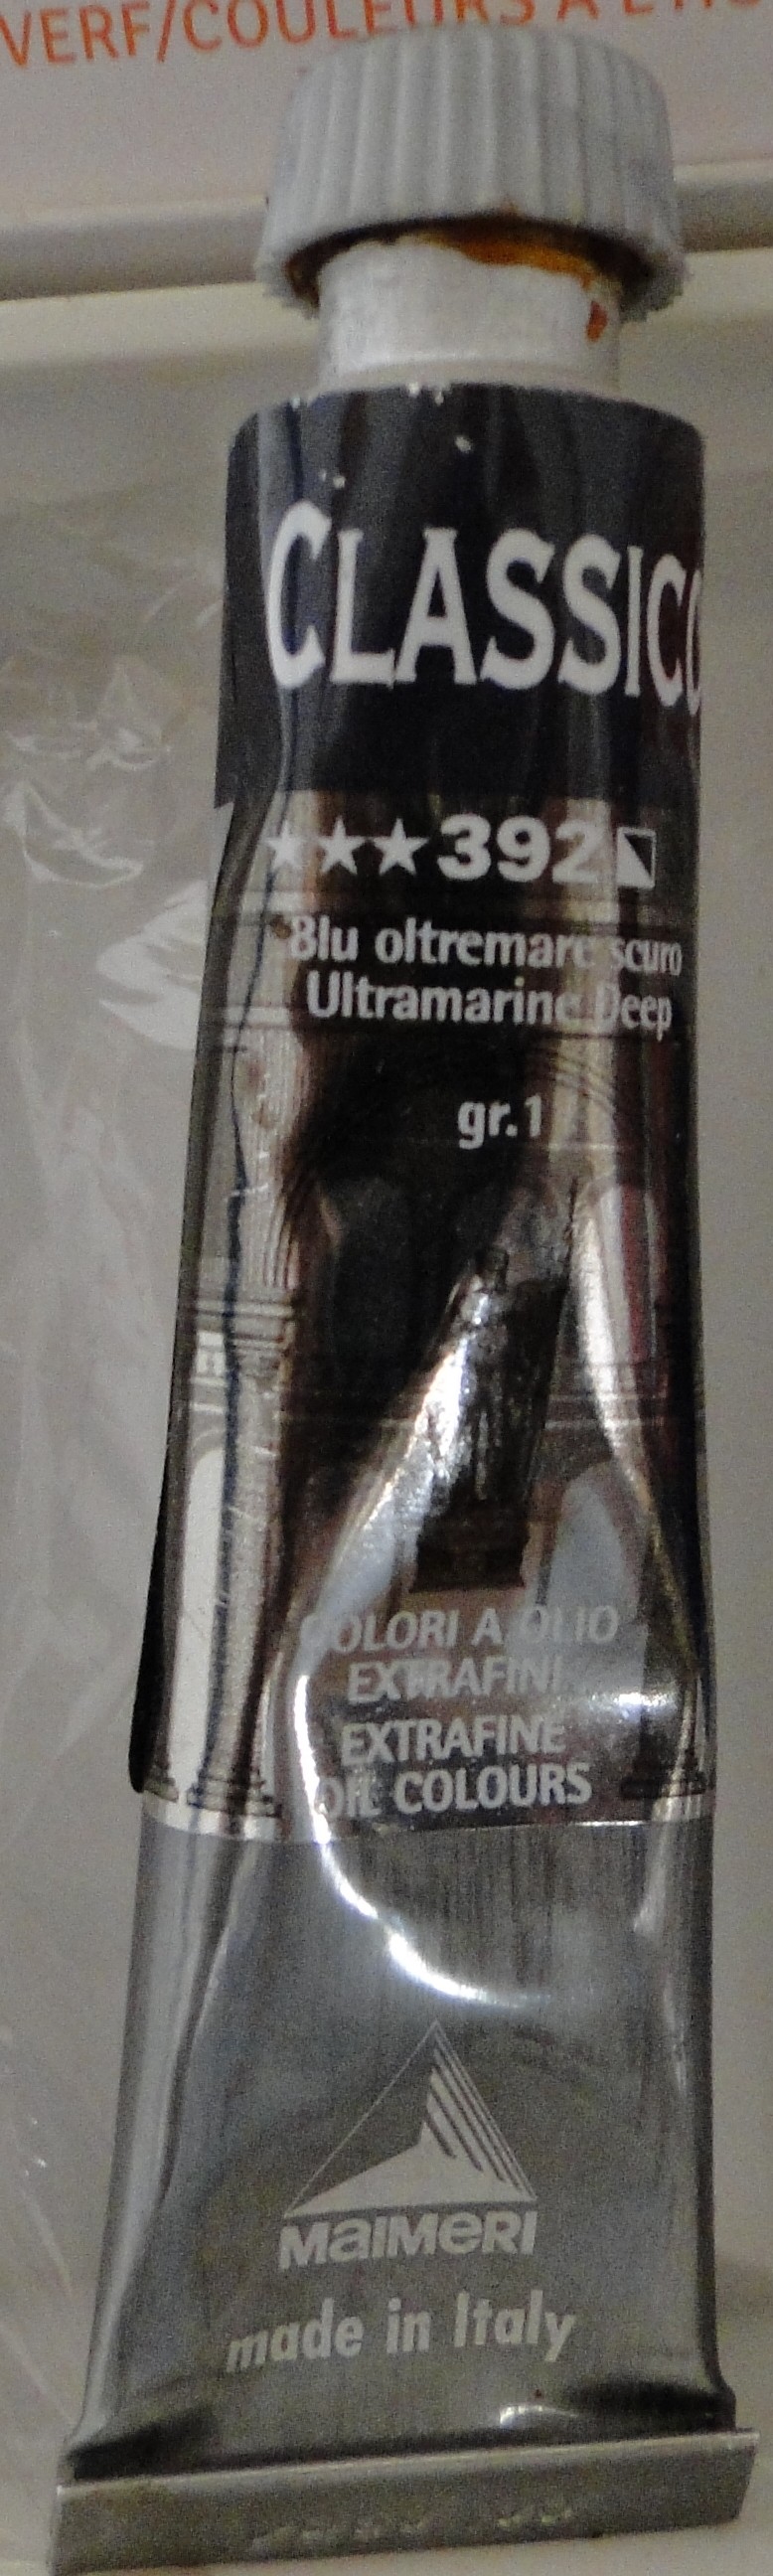 Oil color Maimeri Classico 20 ml 392 - 2,95 € Maimer11